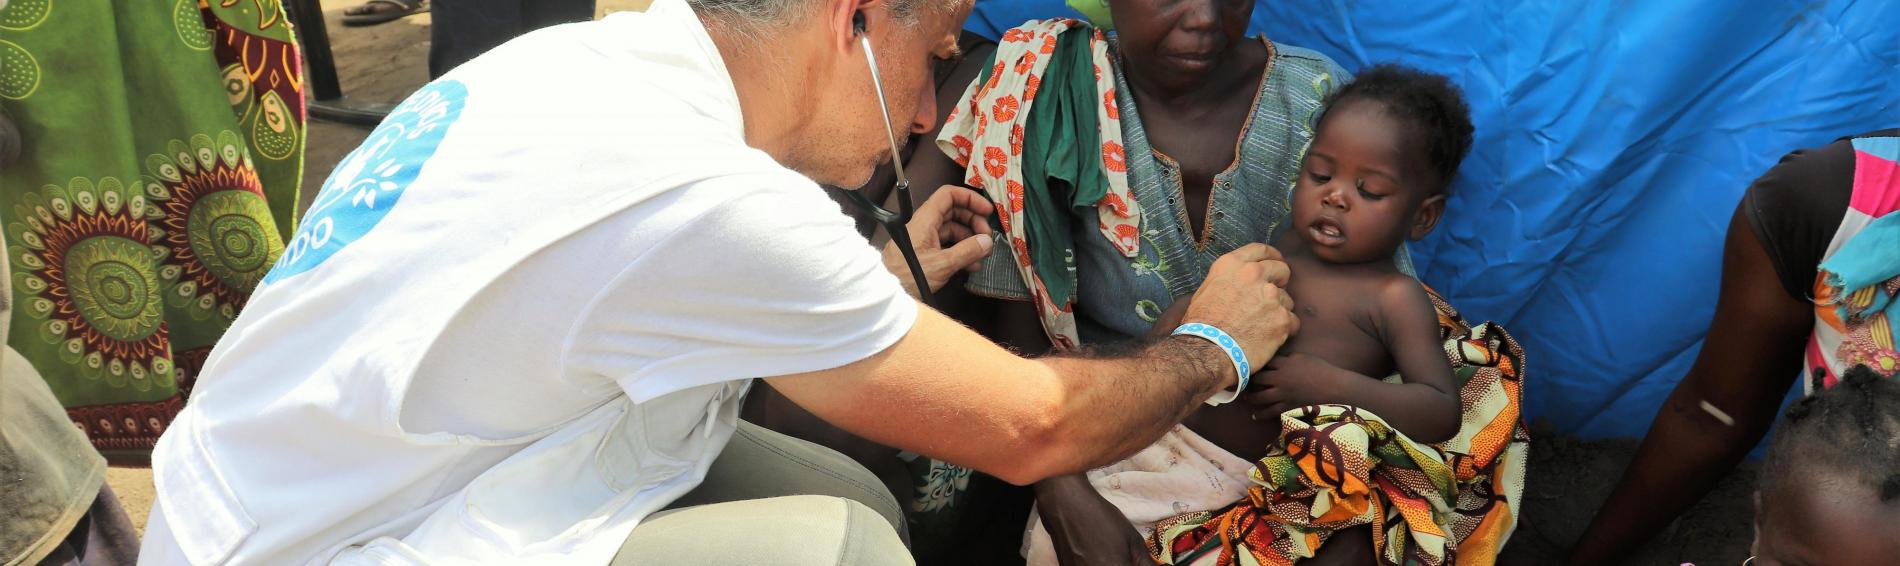 arts onderzoekt kind in mozambique